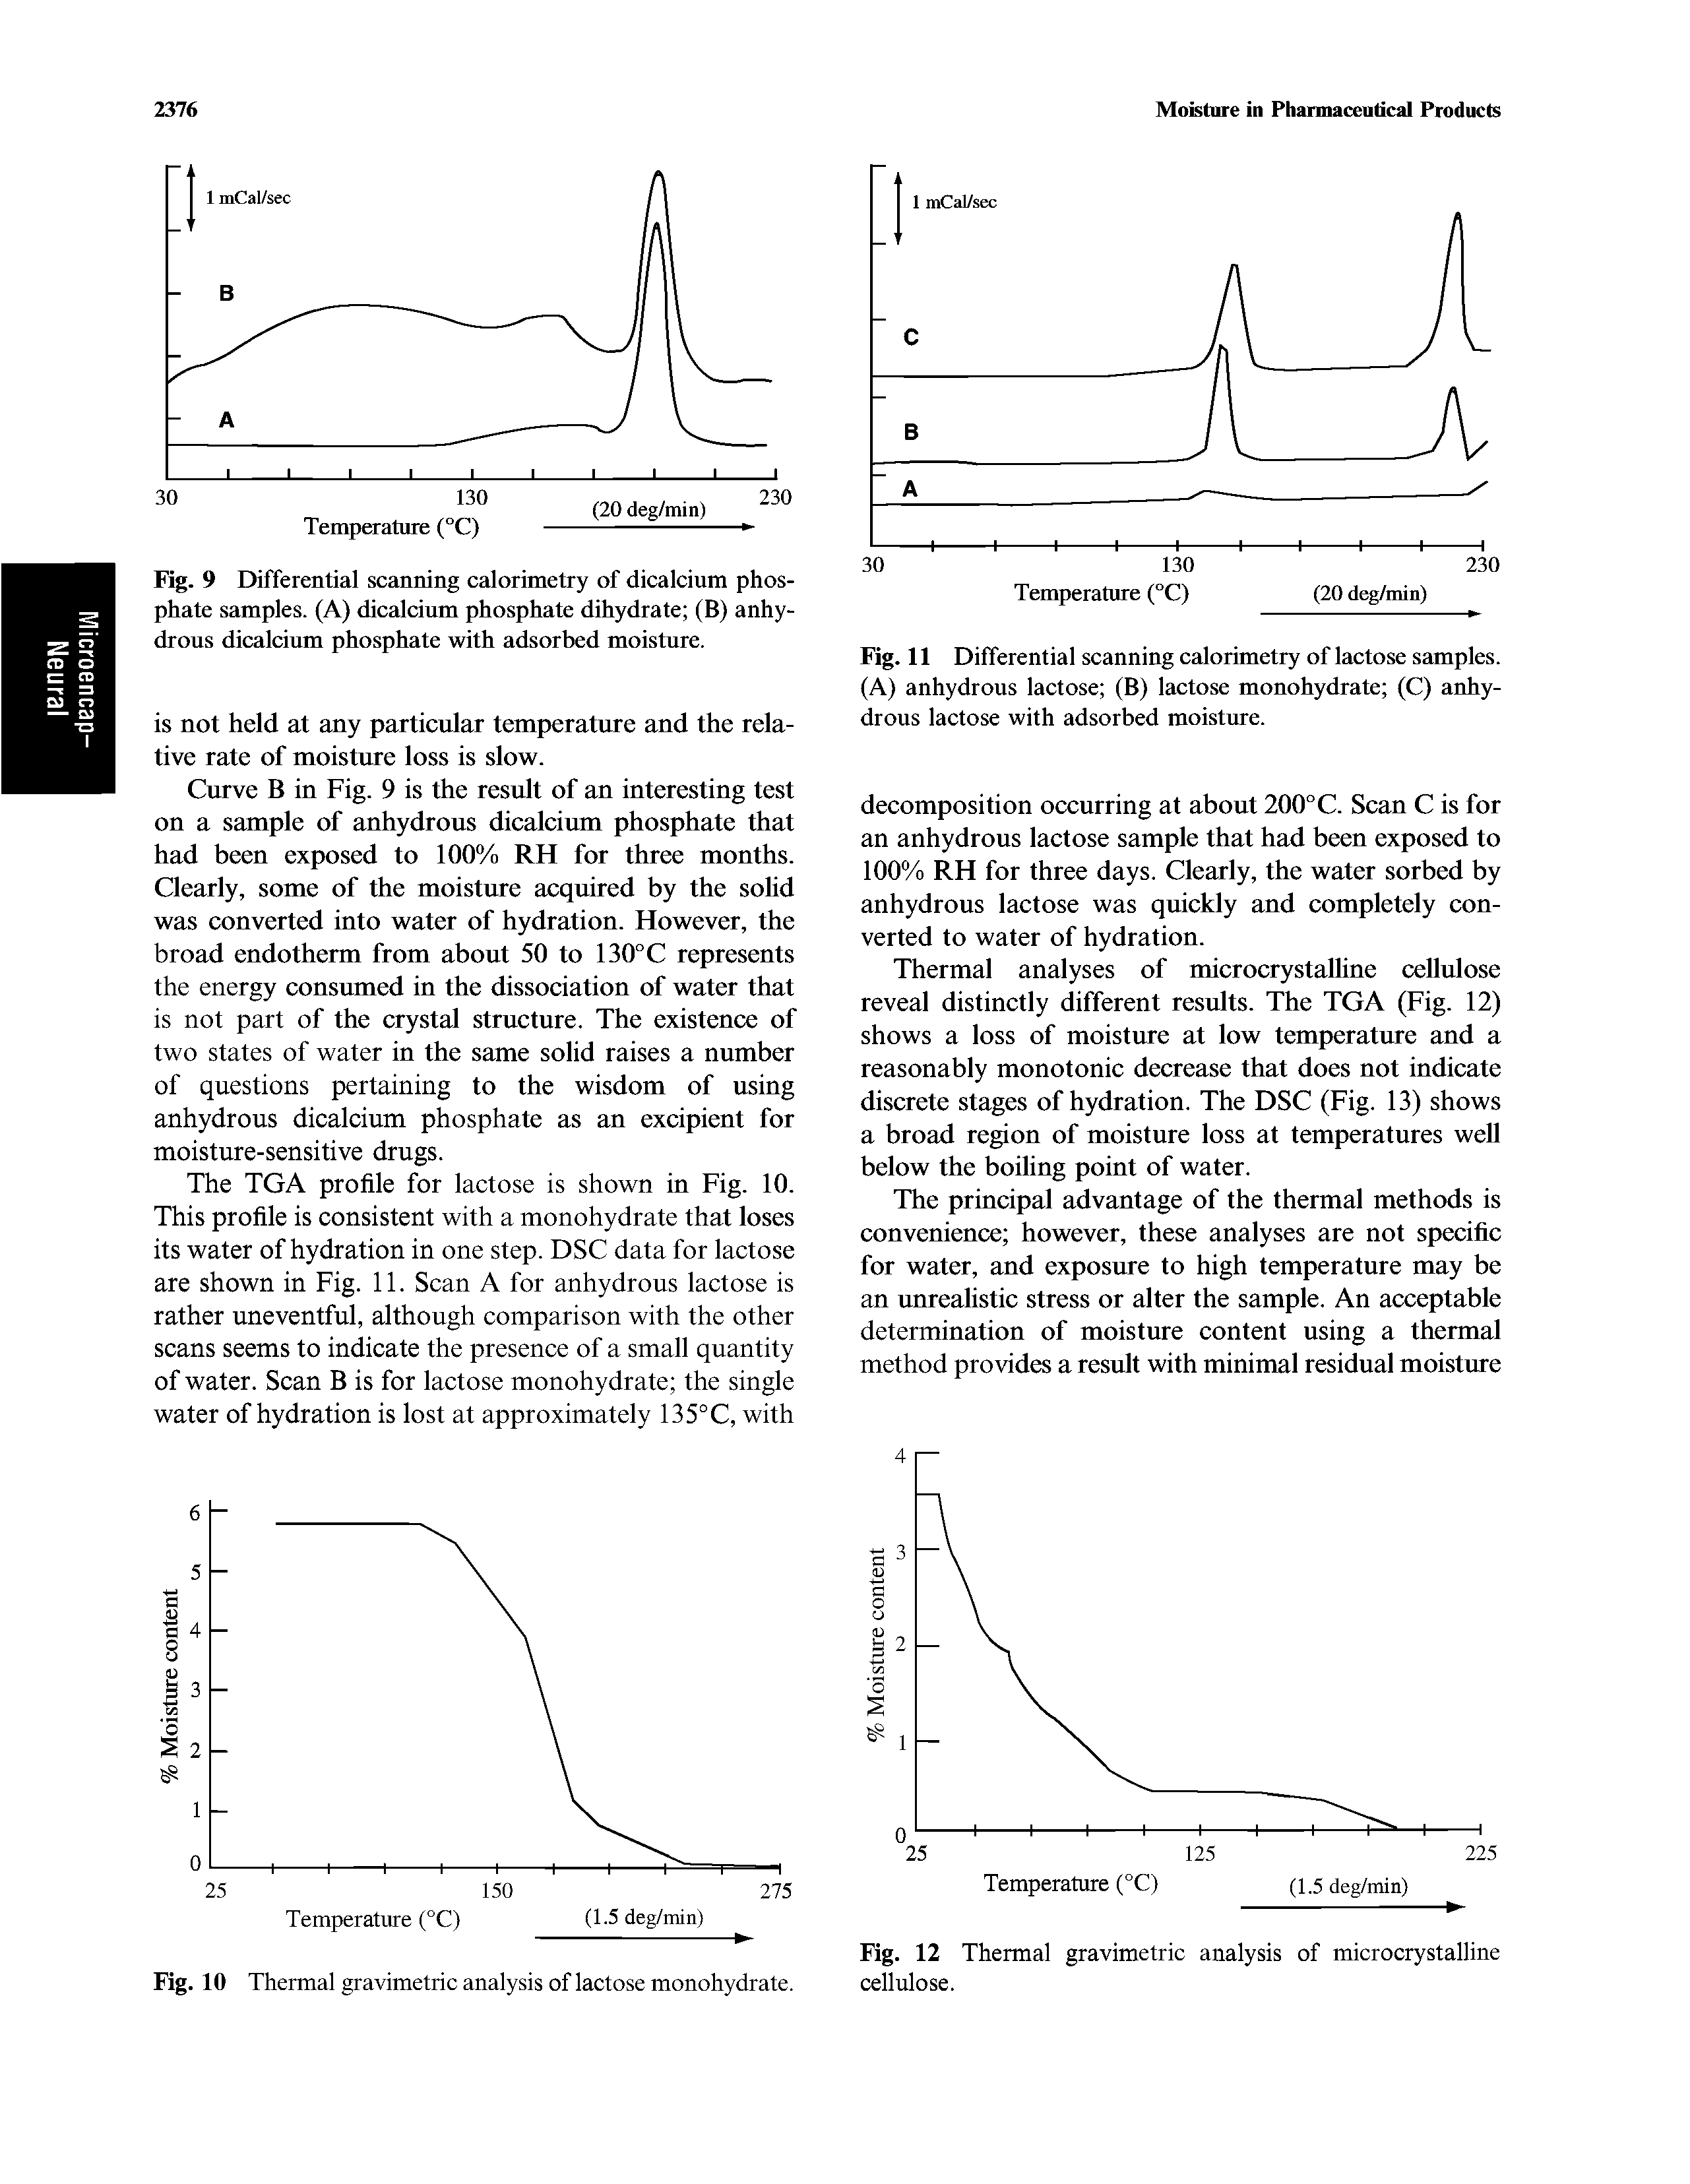 Fig. 9 Differential scanning calorimetry of dicalcium phosphate samples. (A) dicalcium phosphate dihydrate (B) anhydrous dicalcium phosphate with adsorbed moisture.